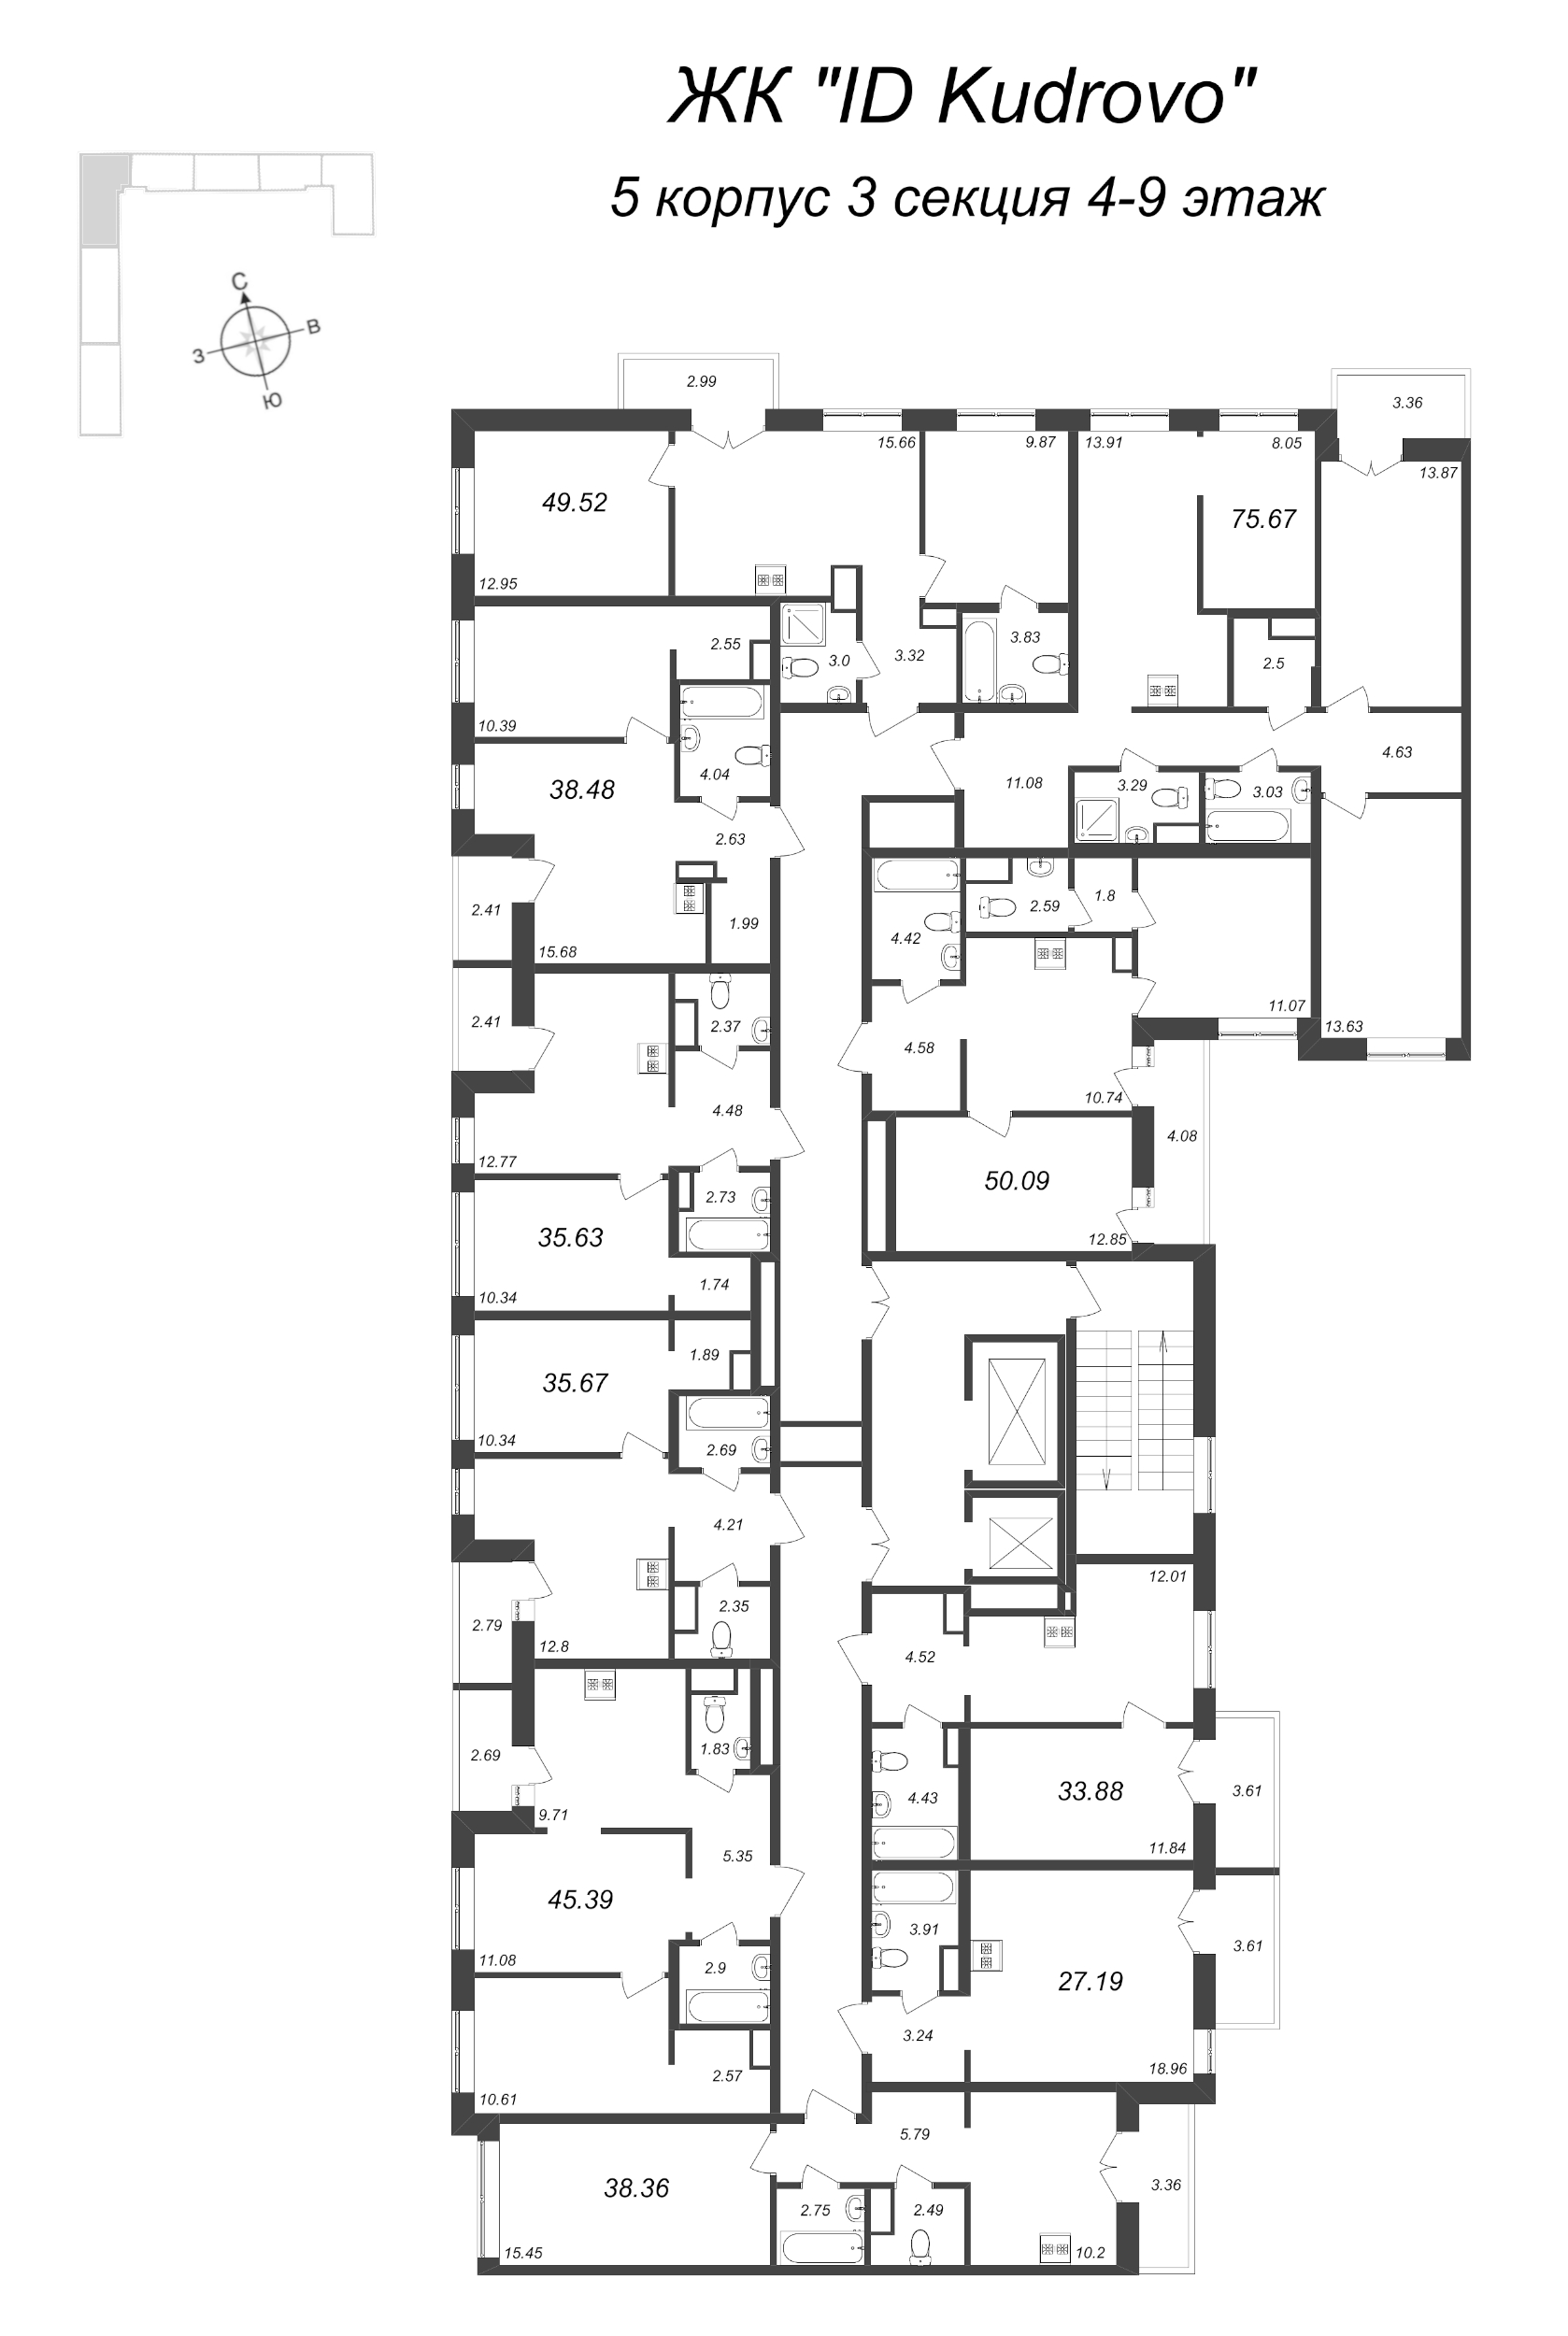 2-комнатная (Евро) квартира, 38.48 м² - планировка этажа